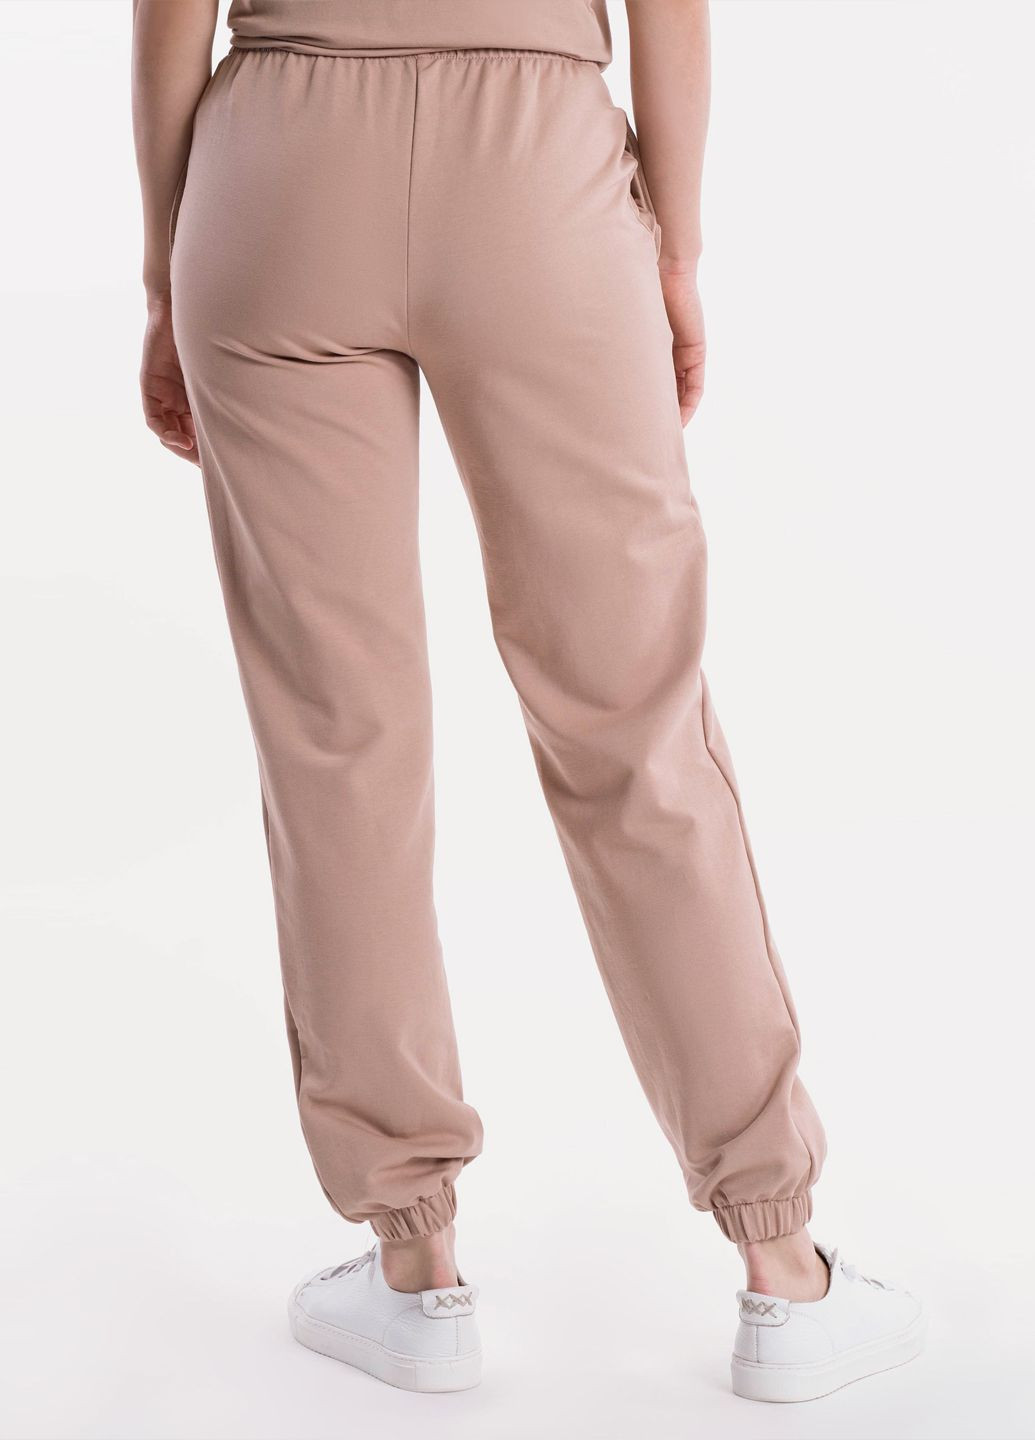 Спортивные брюки женские Freedom бежевые Arber sportpants w6 (282841905)